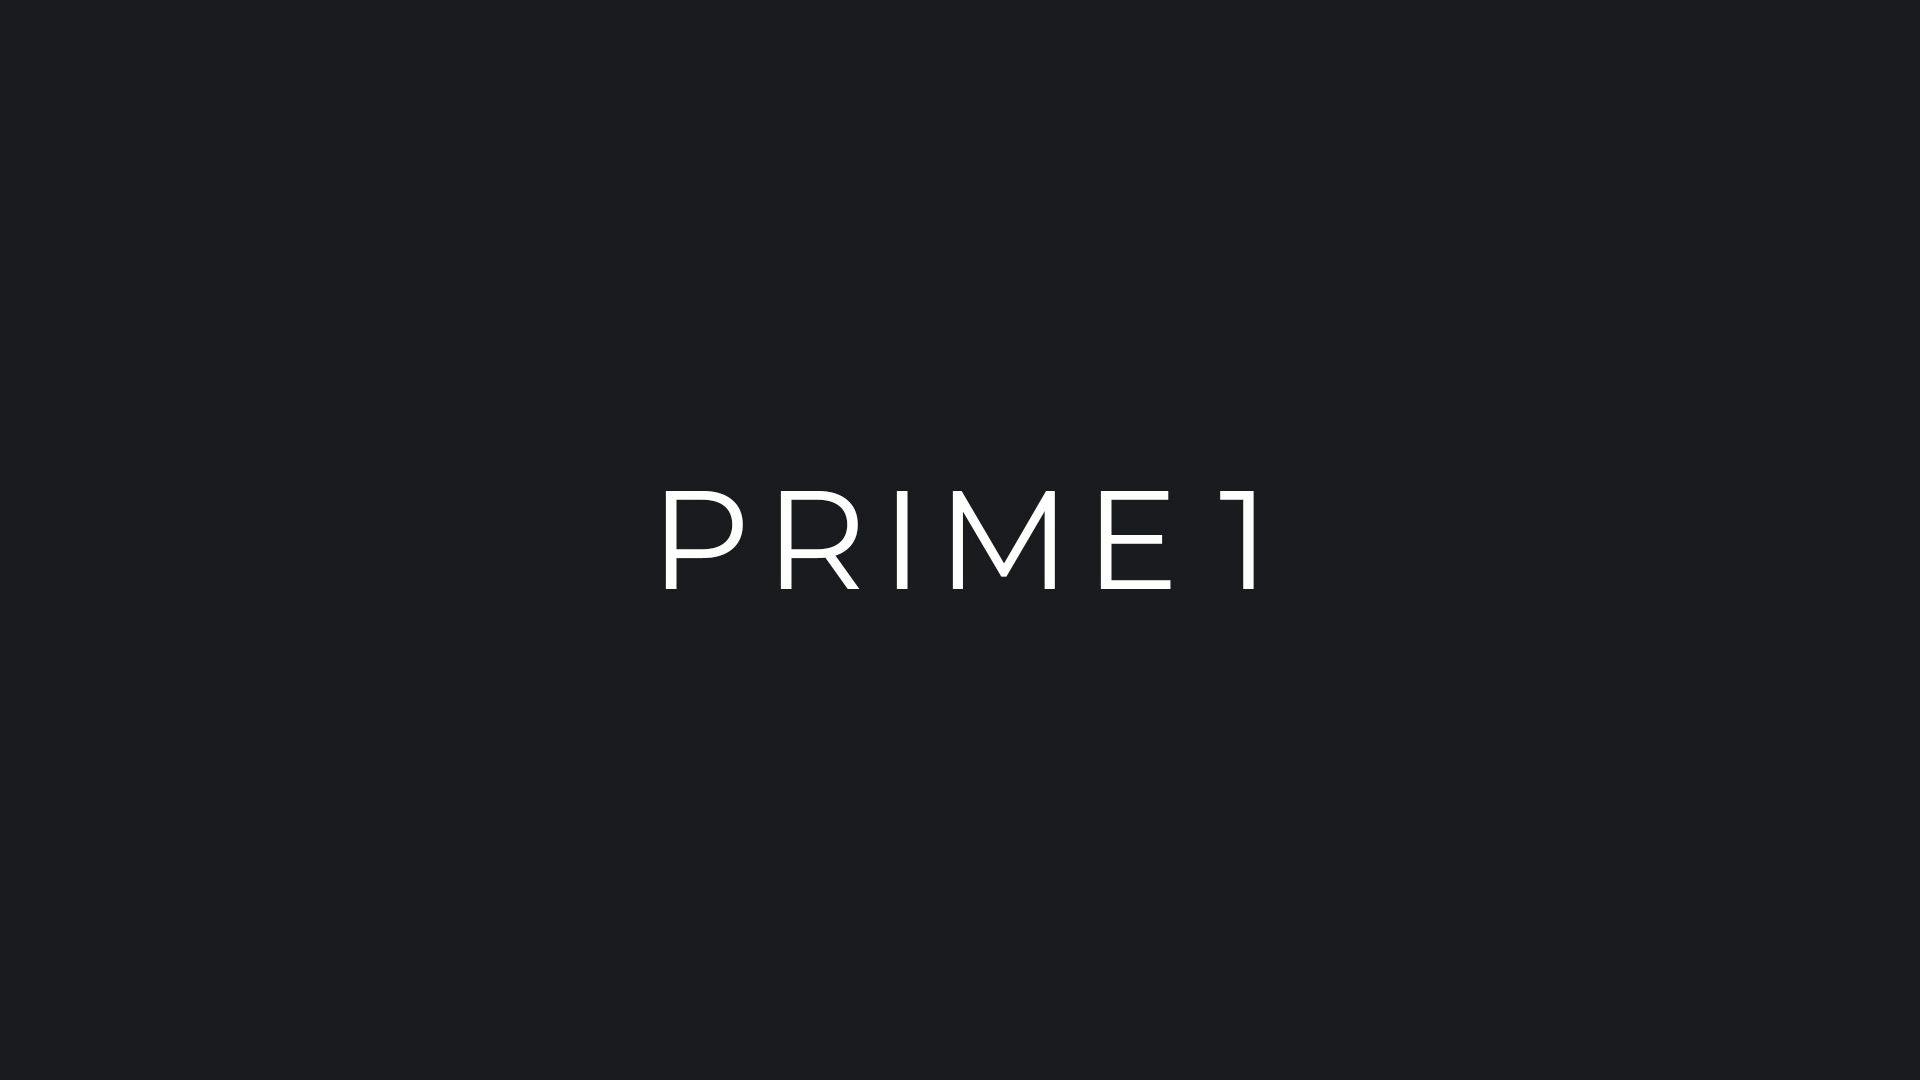 Prime 1 ~ VulnHub